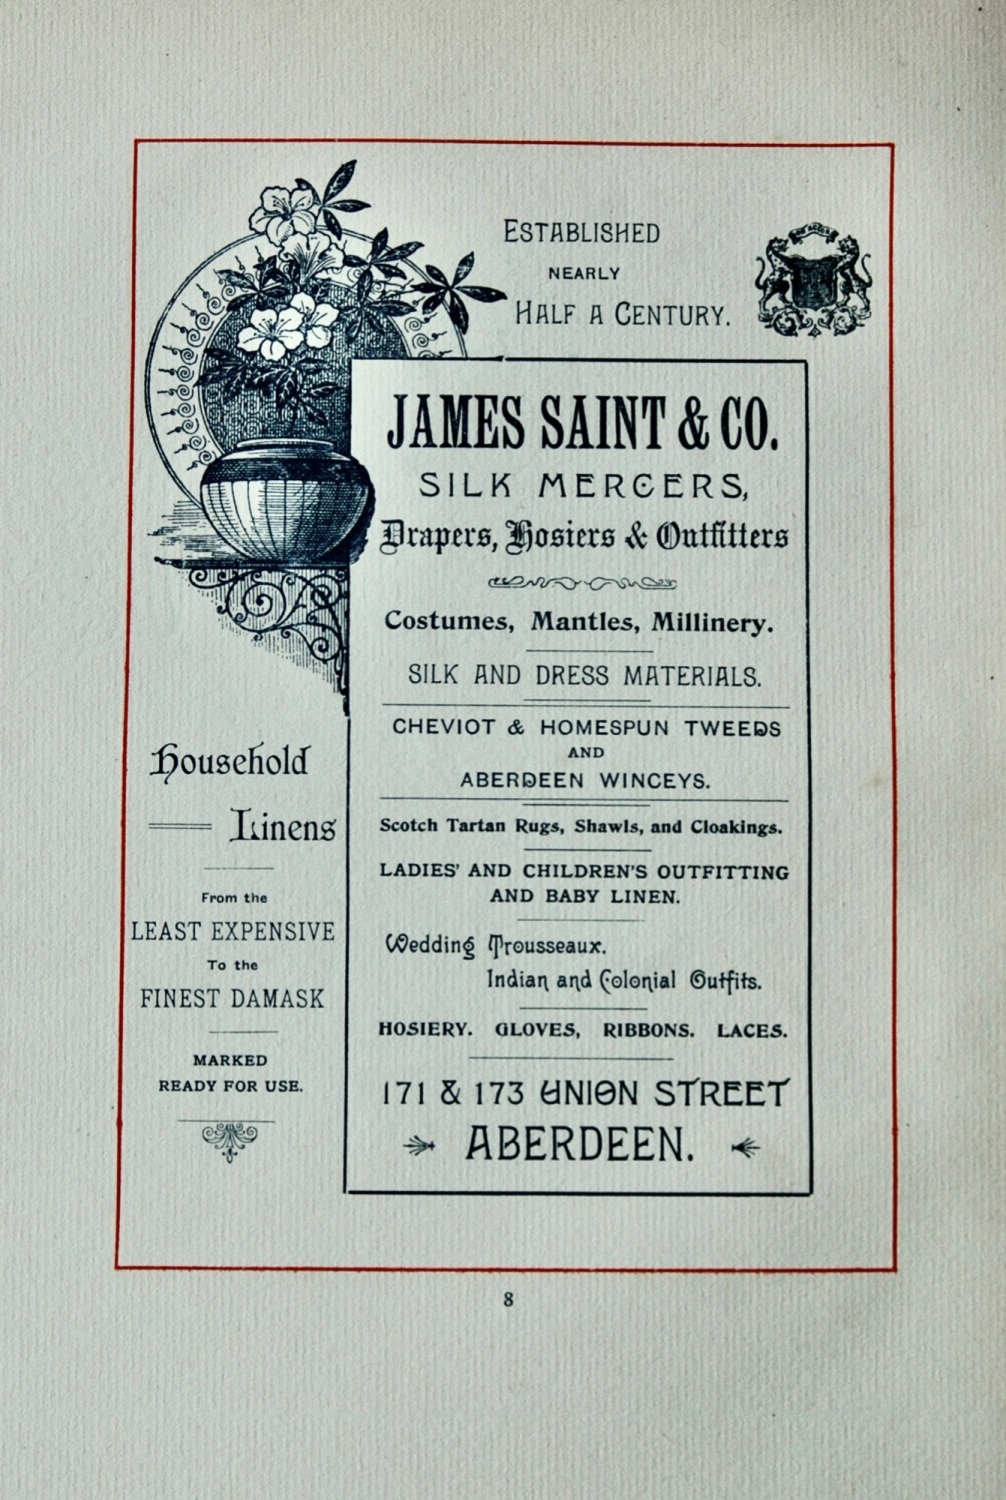 James Saint & Co.  Silk Mercers, Drapers, Hosiers & Outfitters.  171 & 173 